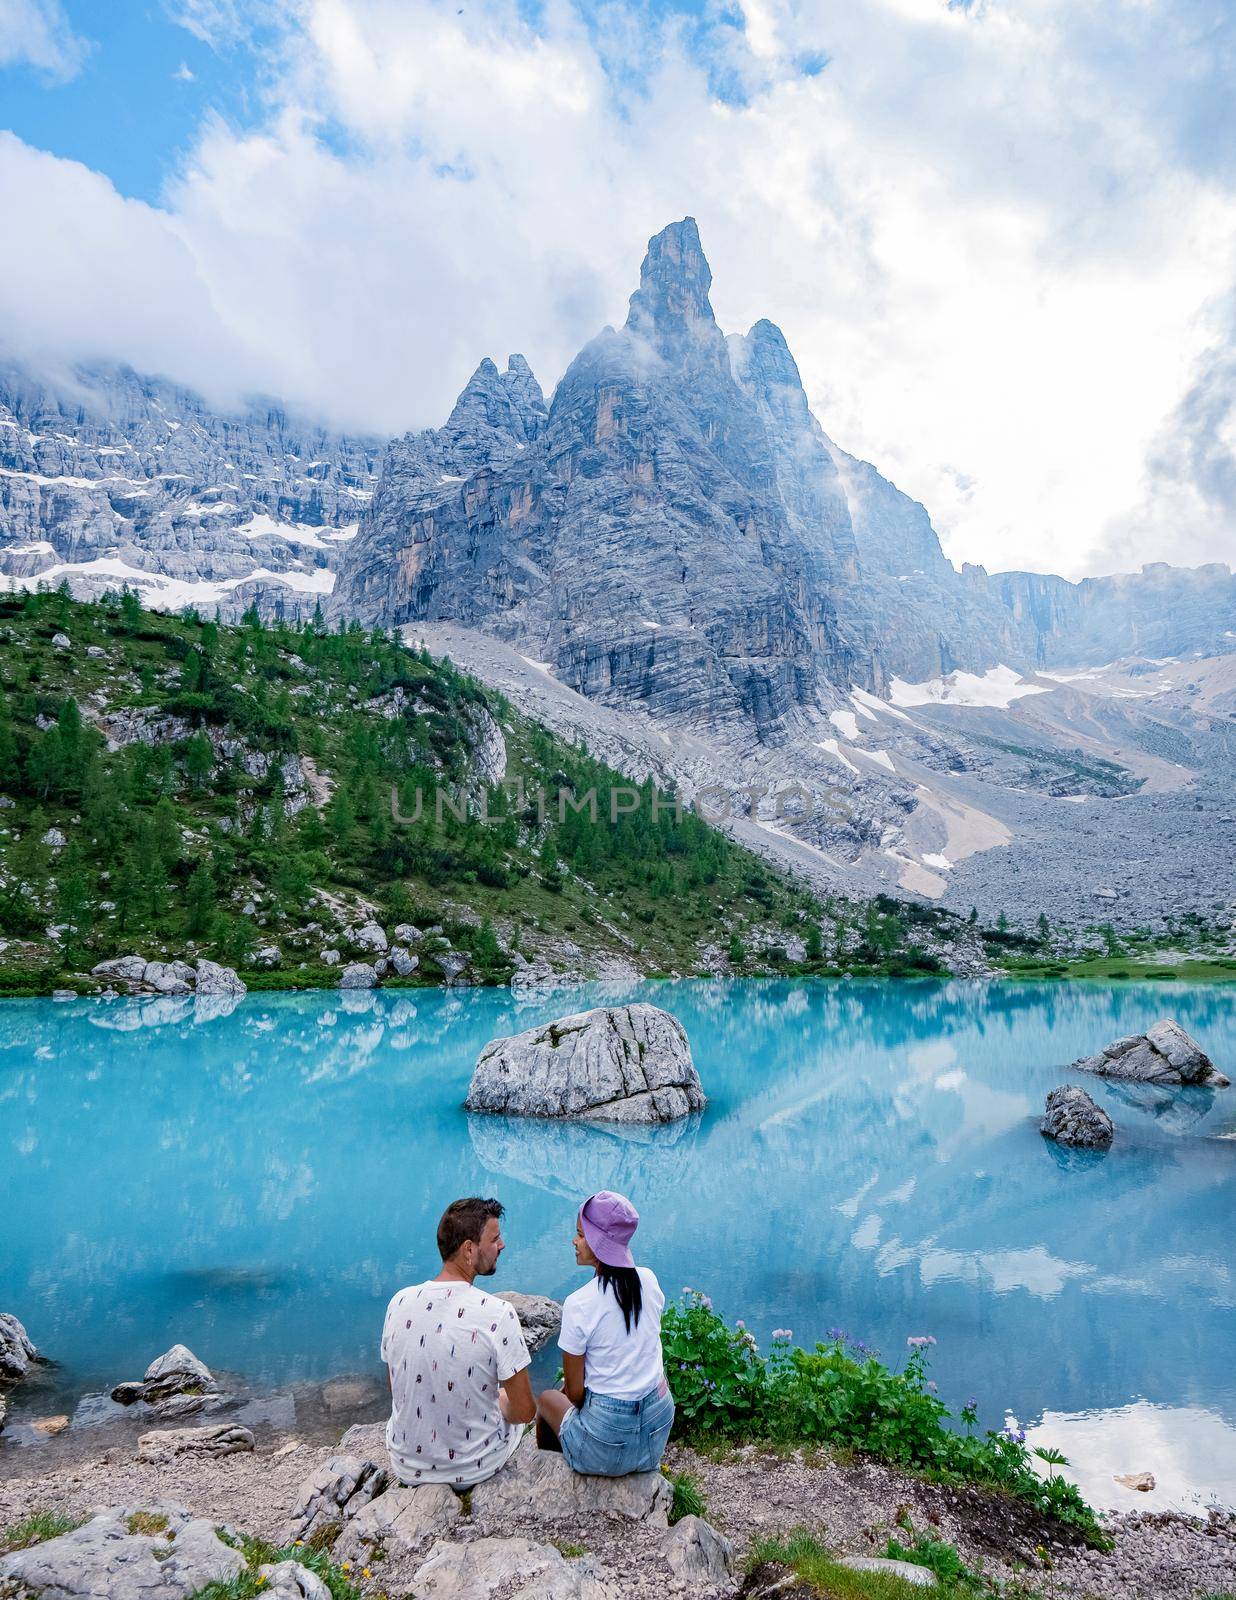 Lake Sorapis Lago di Sorapis in the Dolomites is a popular travel destination in Italy. Europe, the Couple visited the blue-green lake in the Italian Dolomites, Beautiful Lake Sorapis